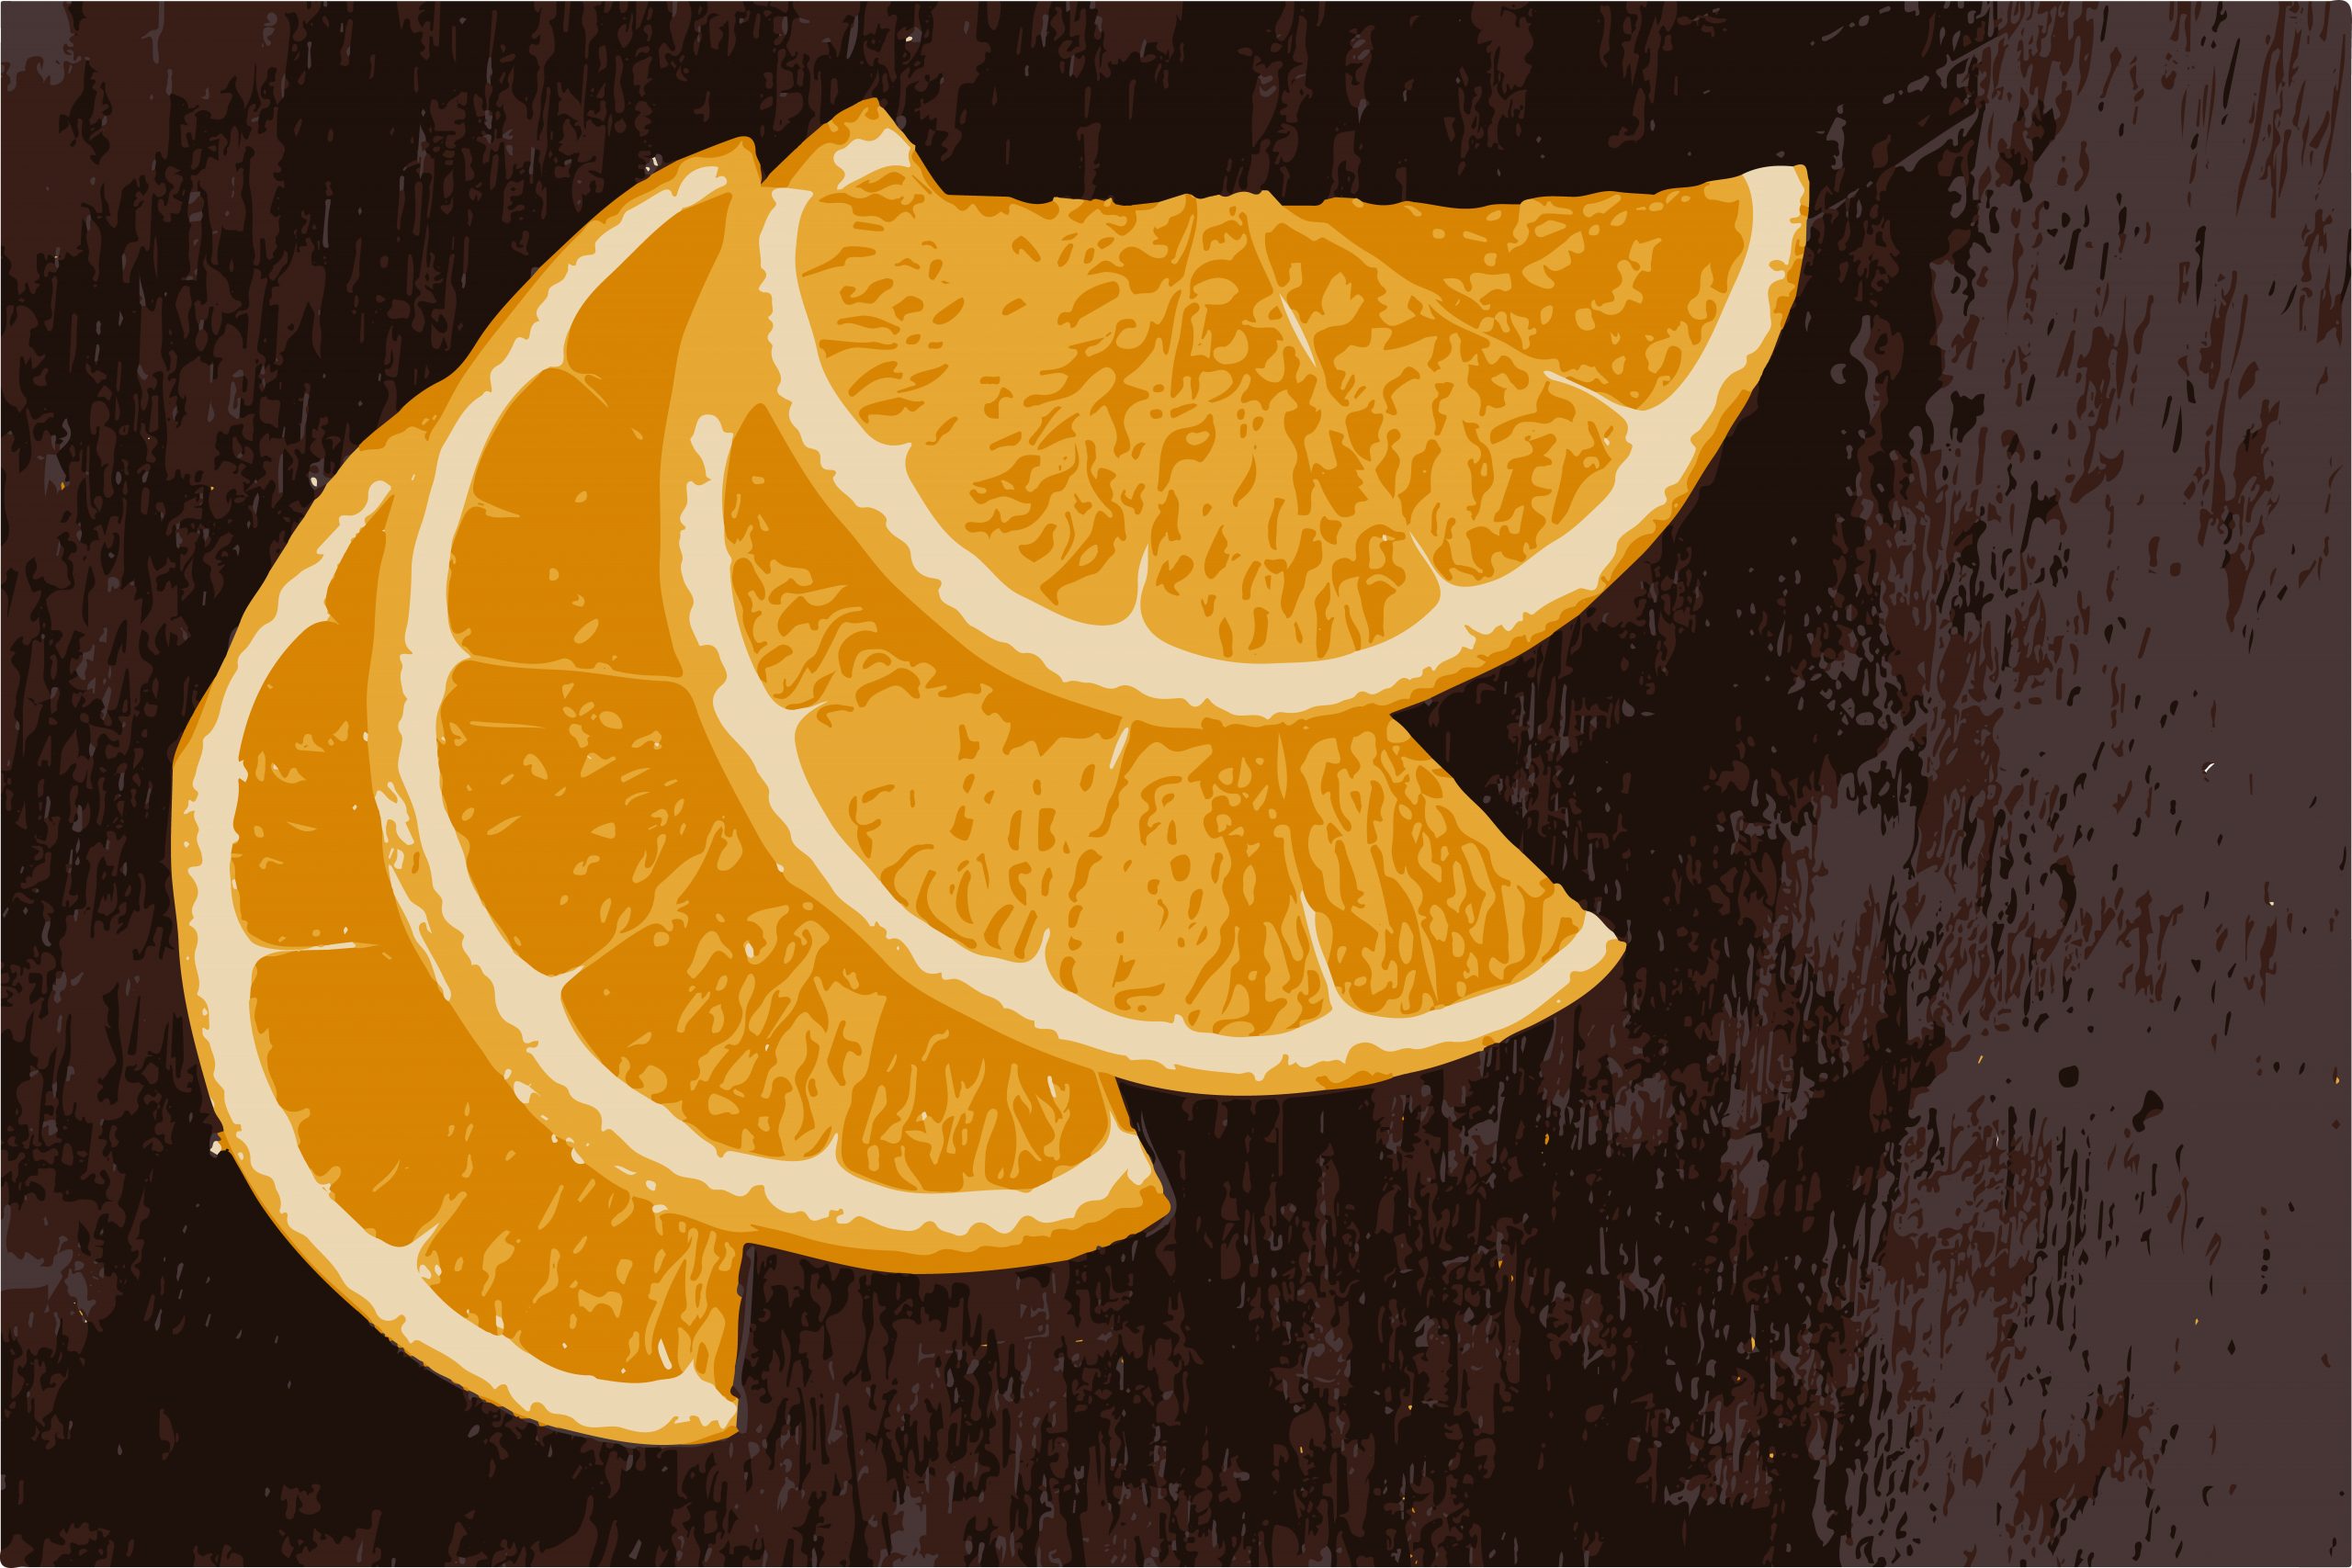 ILLUSTRATION of oranges